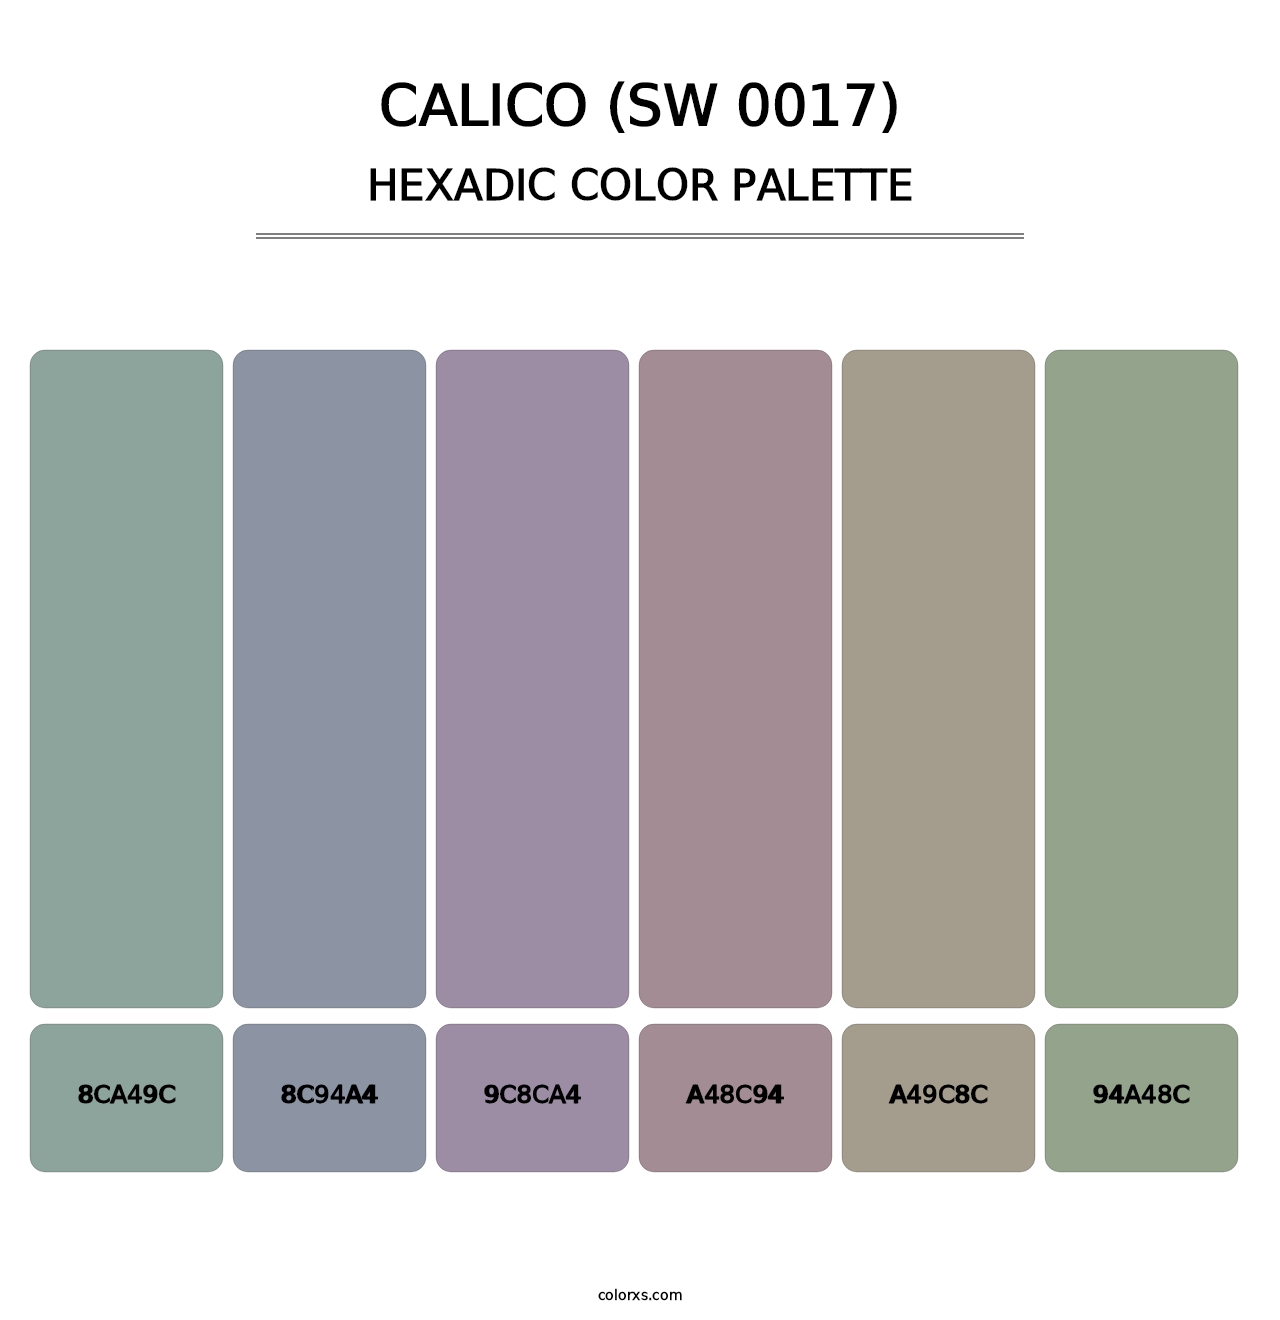 Calico (SW 0017) - Hexadic Color Palette